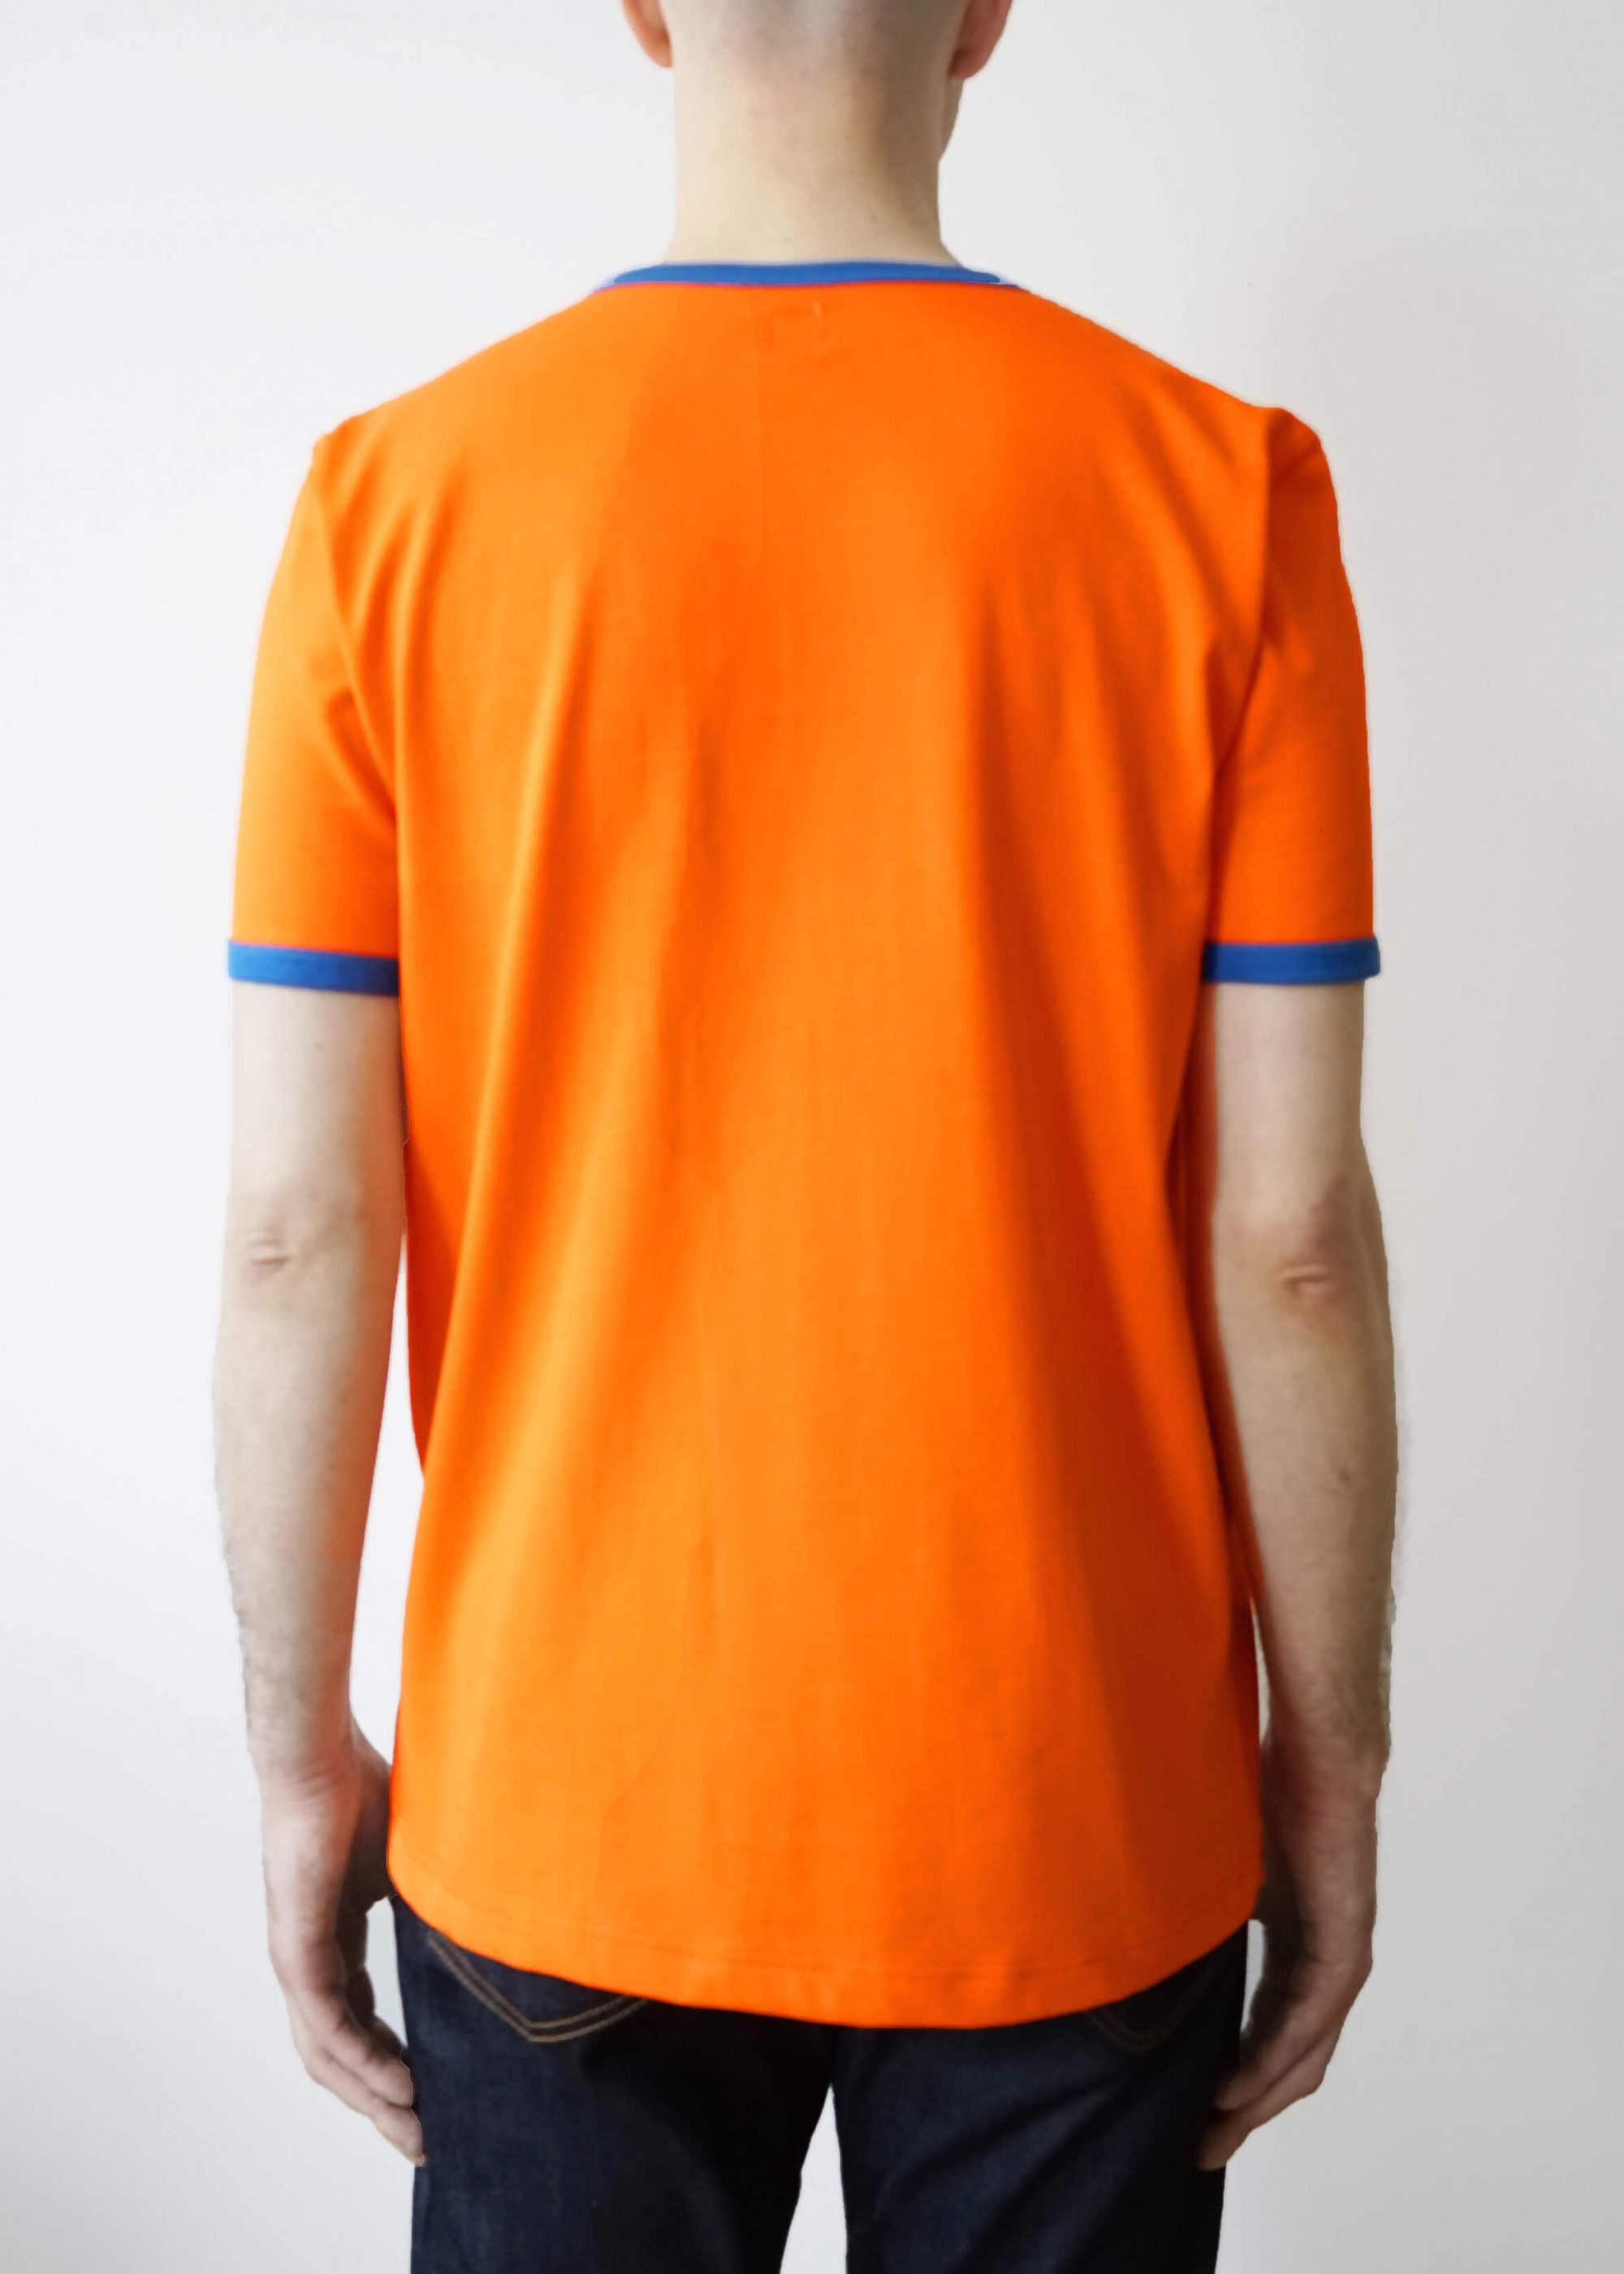 Product image for »Harrison« Orange Blue Ringer T-Shirt 100% Organic Cotton